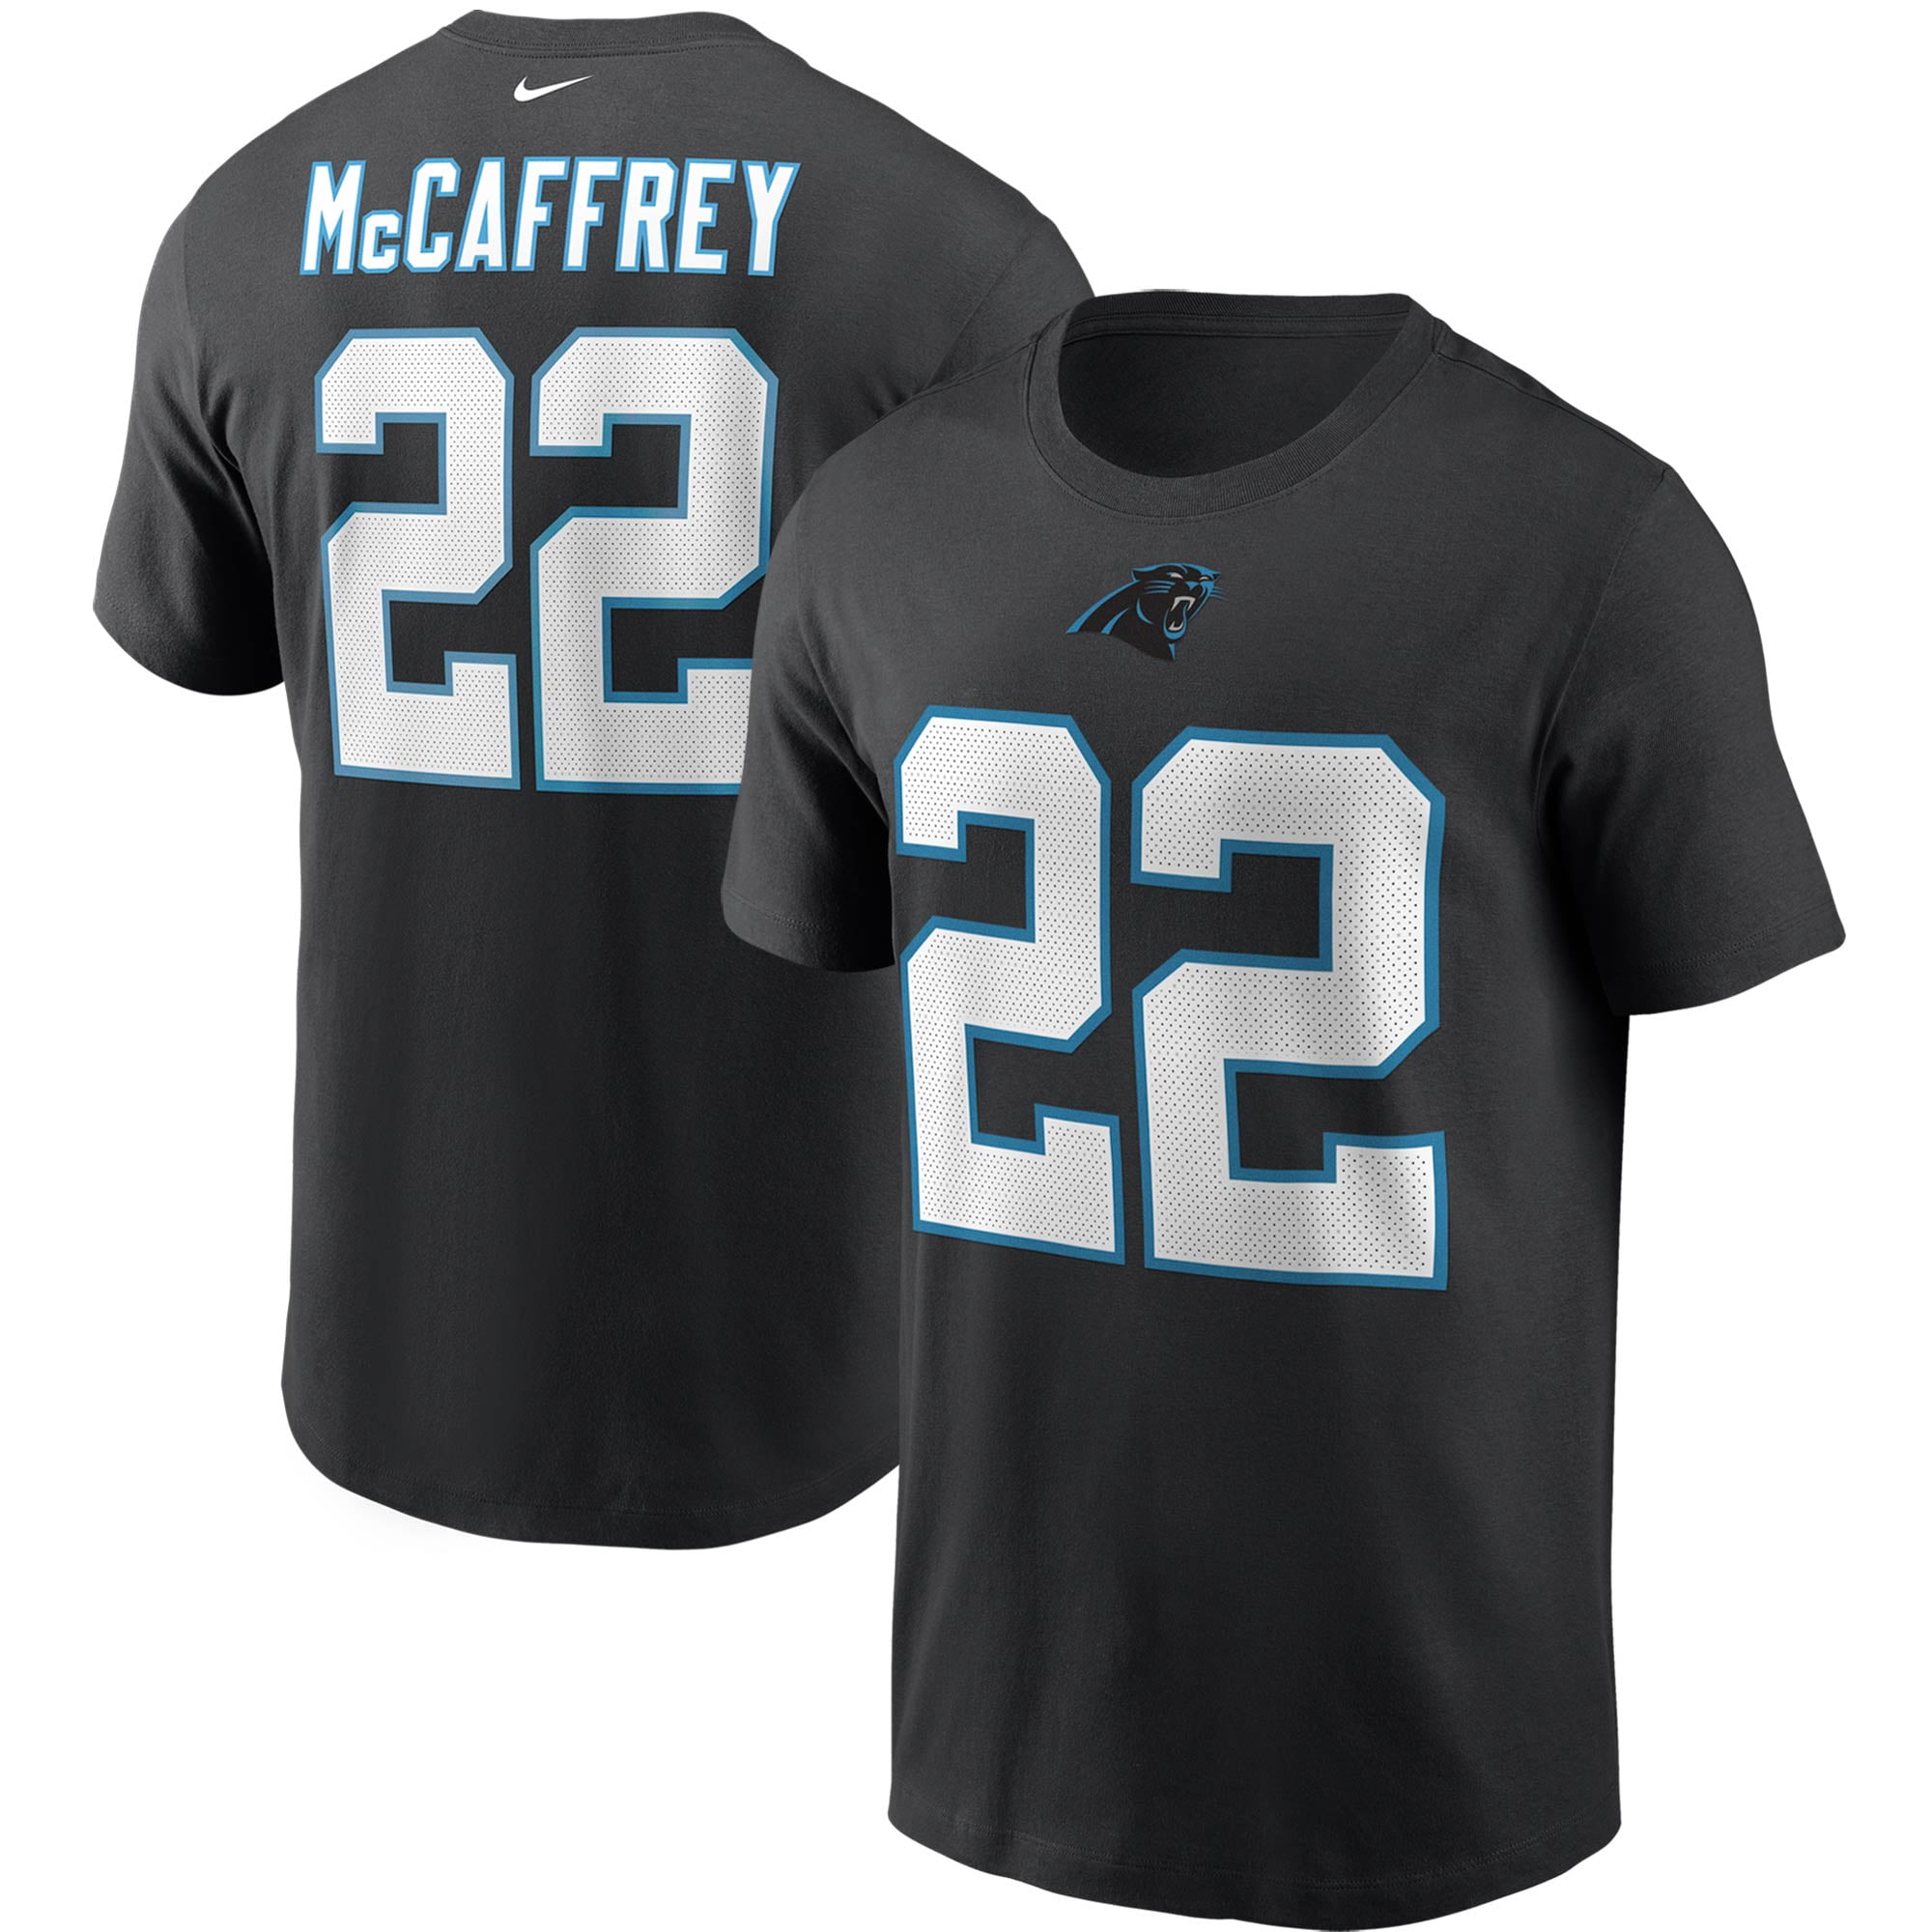 mccaffrey black jersey